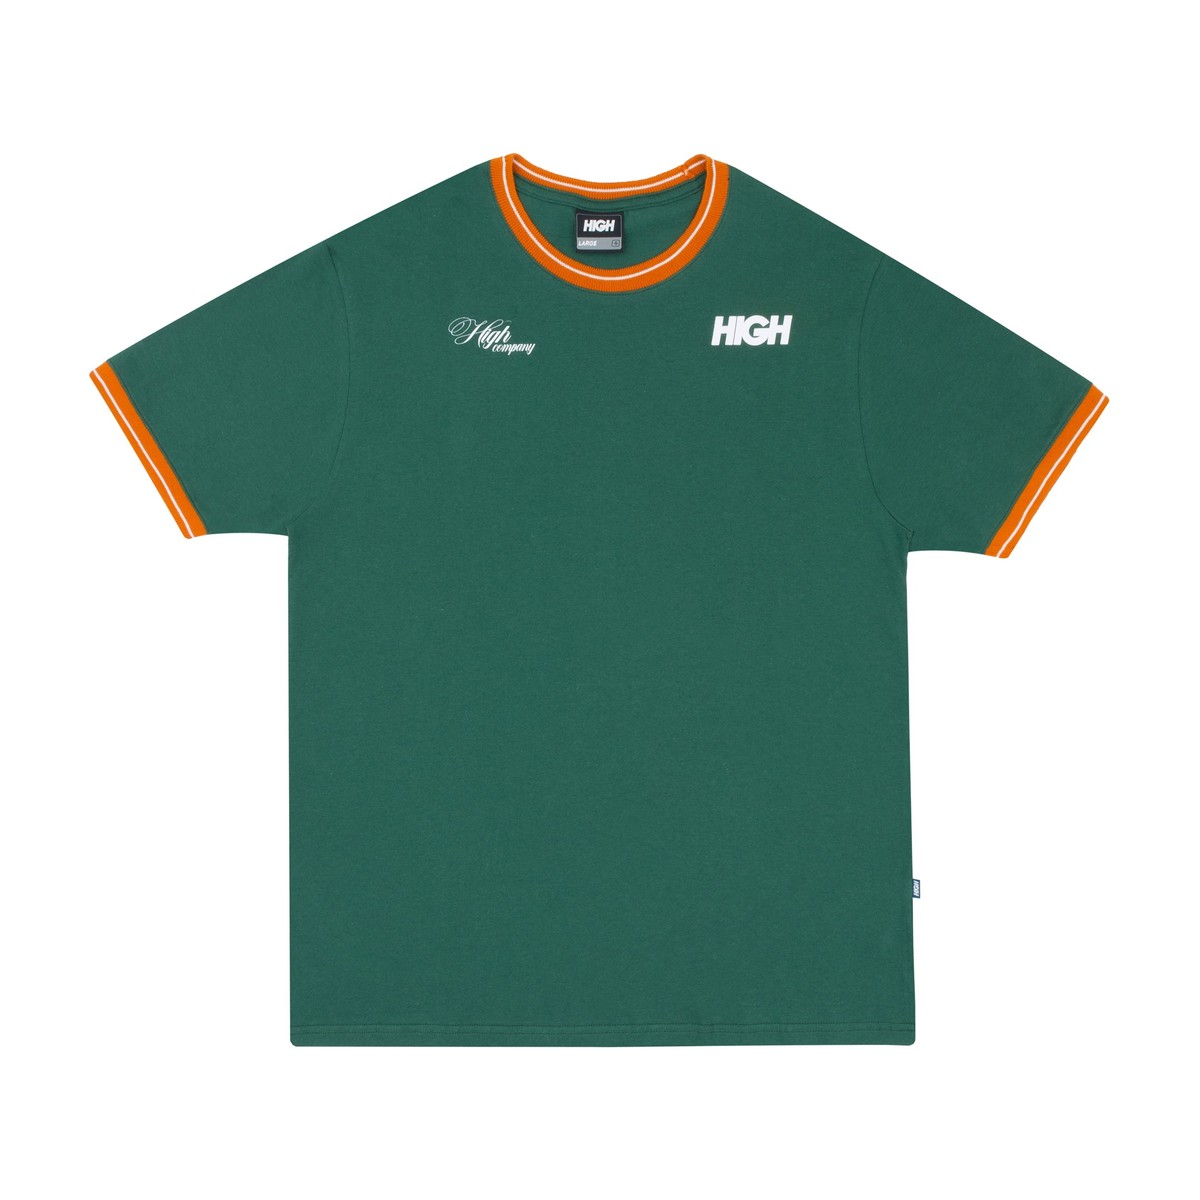 Camiseta High Classy Verde/Laranja - Matriz Skate Shop Online